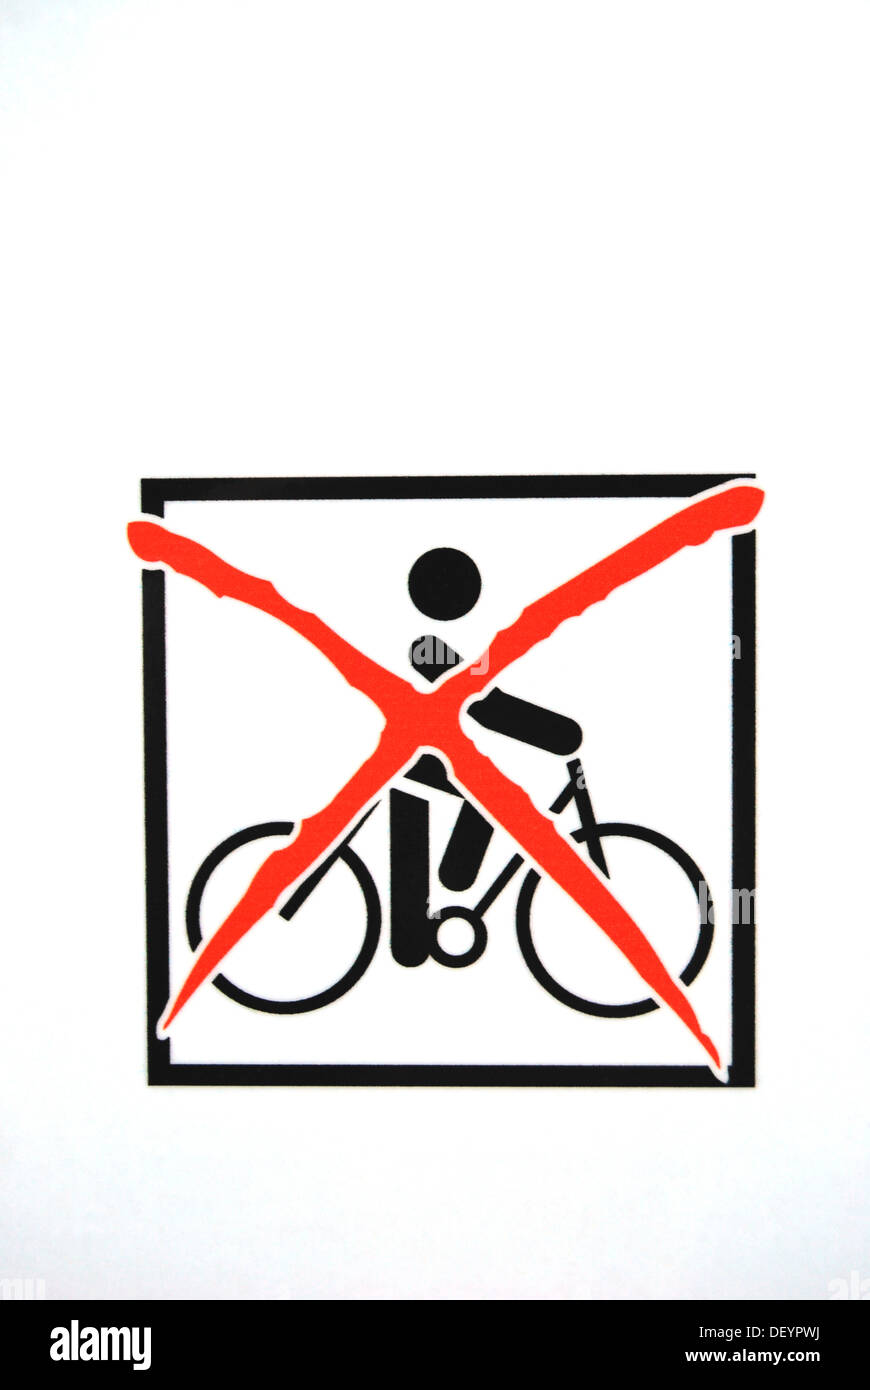 Prohibition sign, no cycling Stock Photo